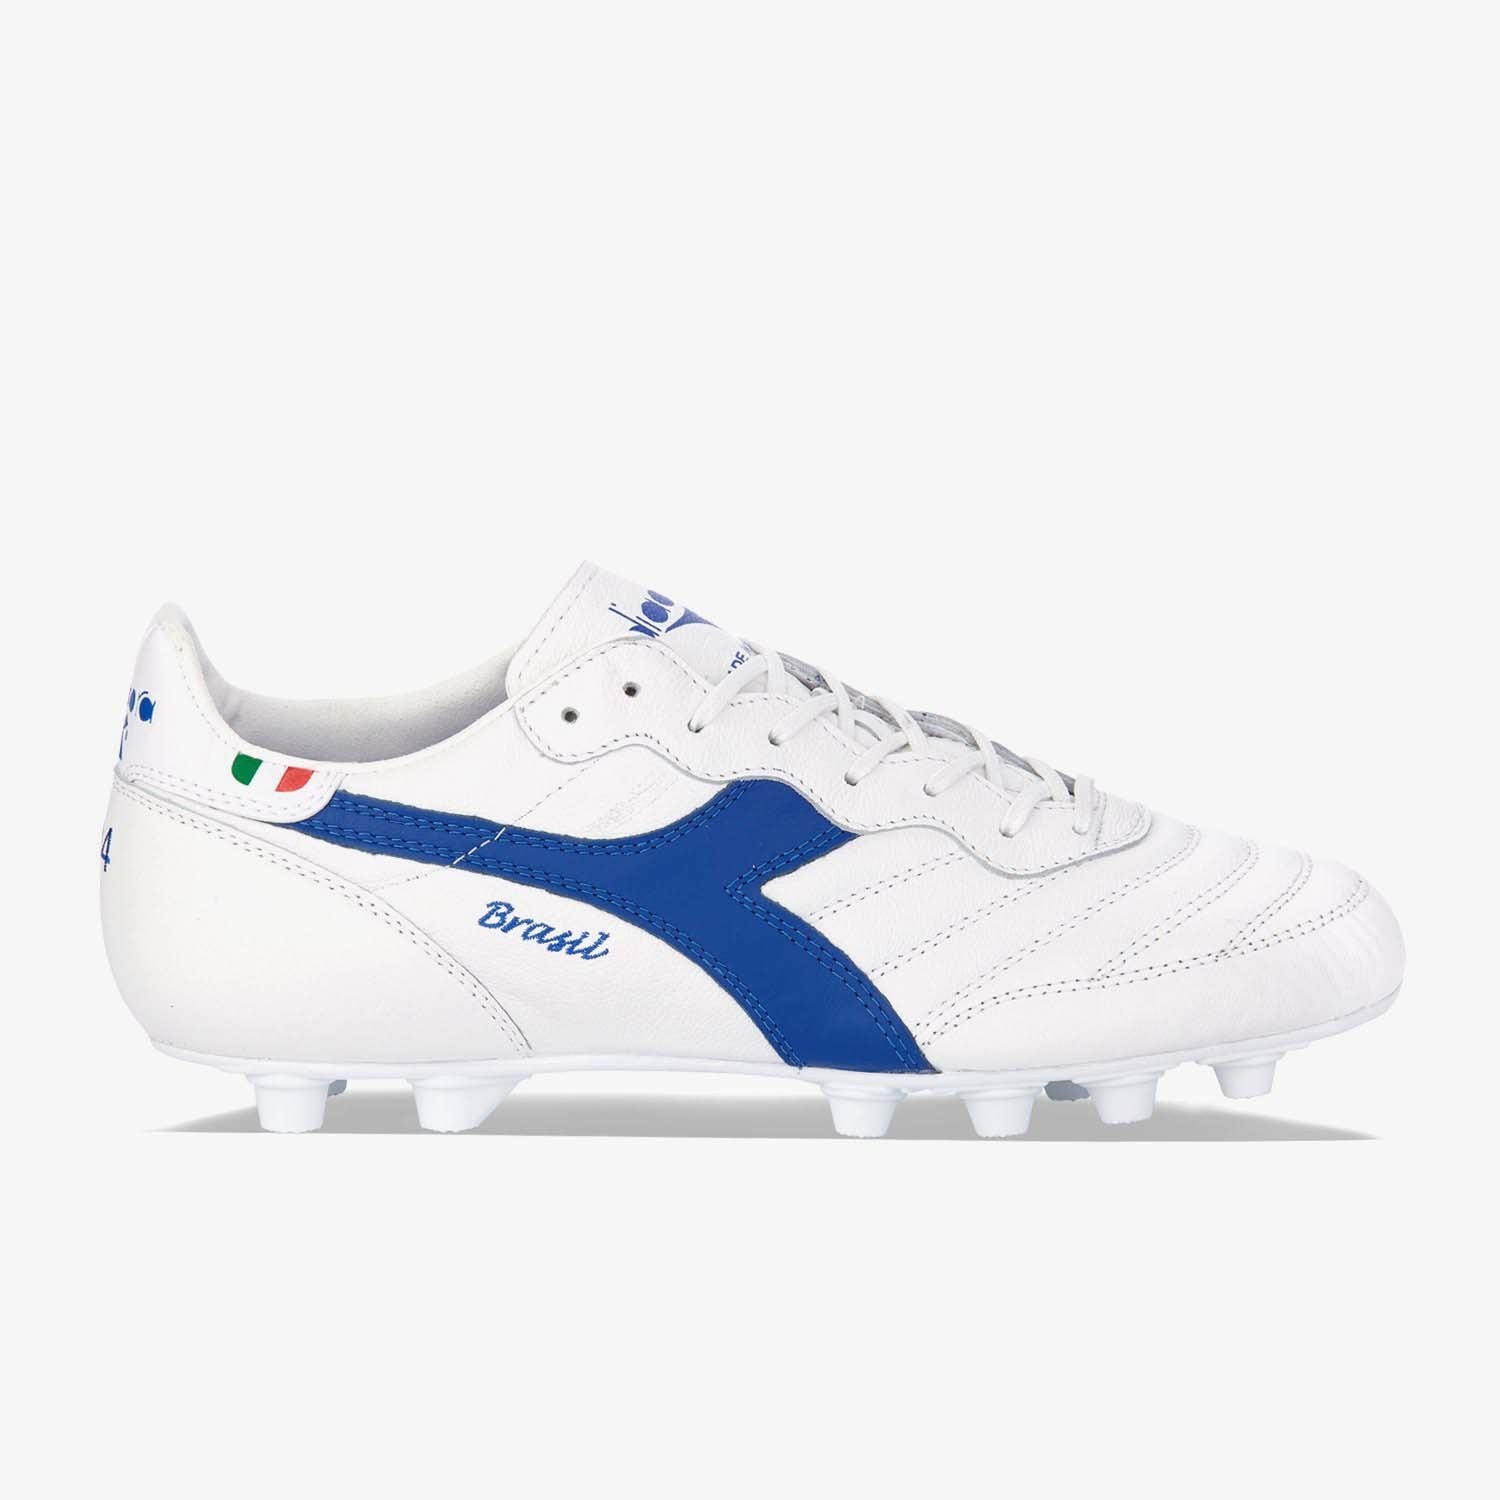 Diadora Brasil Italy OG MD PU Soccer Cleat - White/Blue